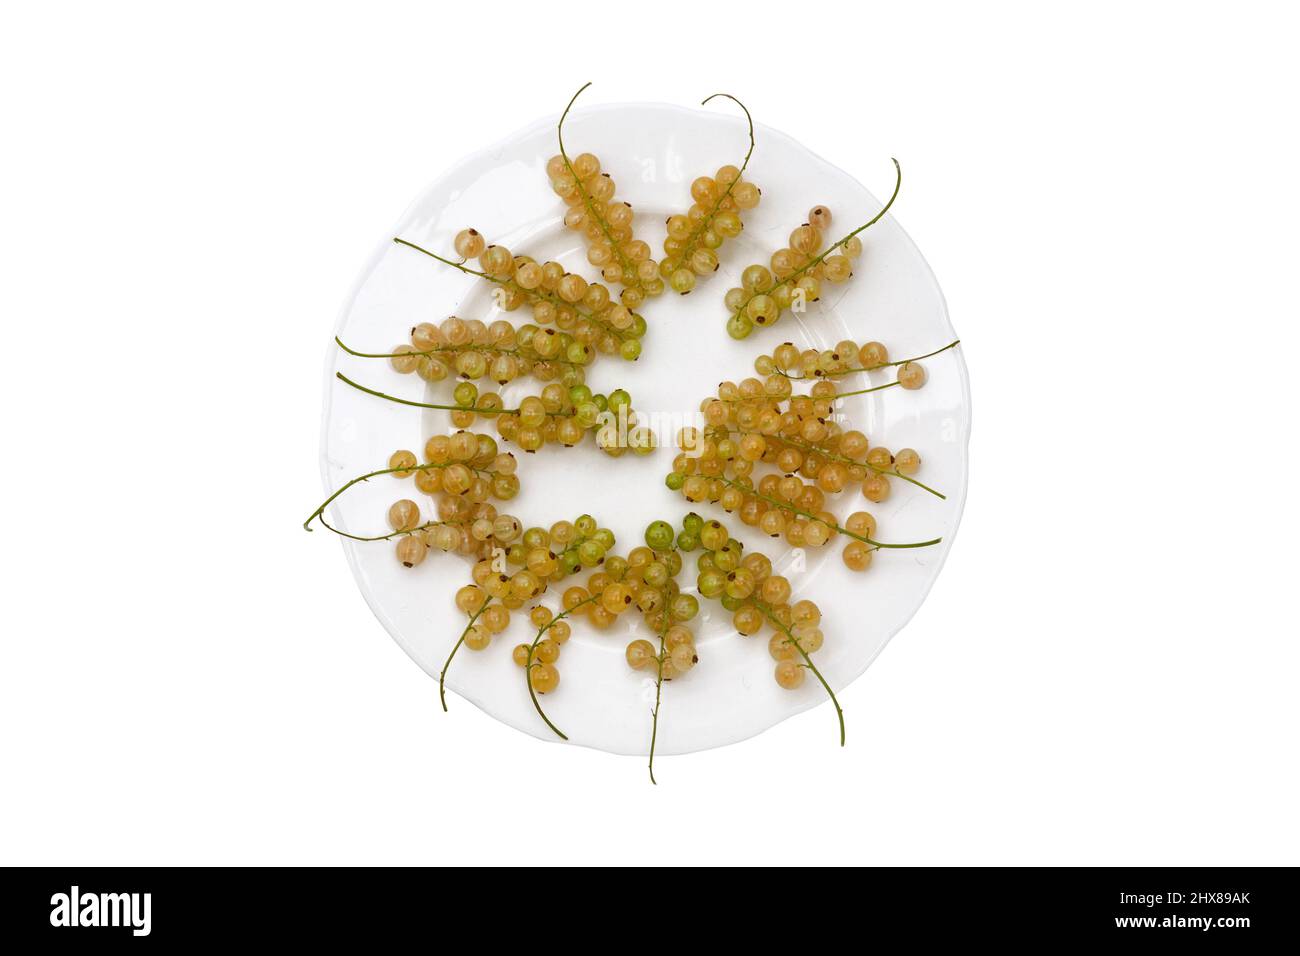 Whitecurrants on a plate Stock Photo